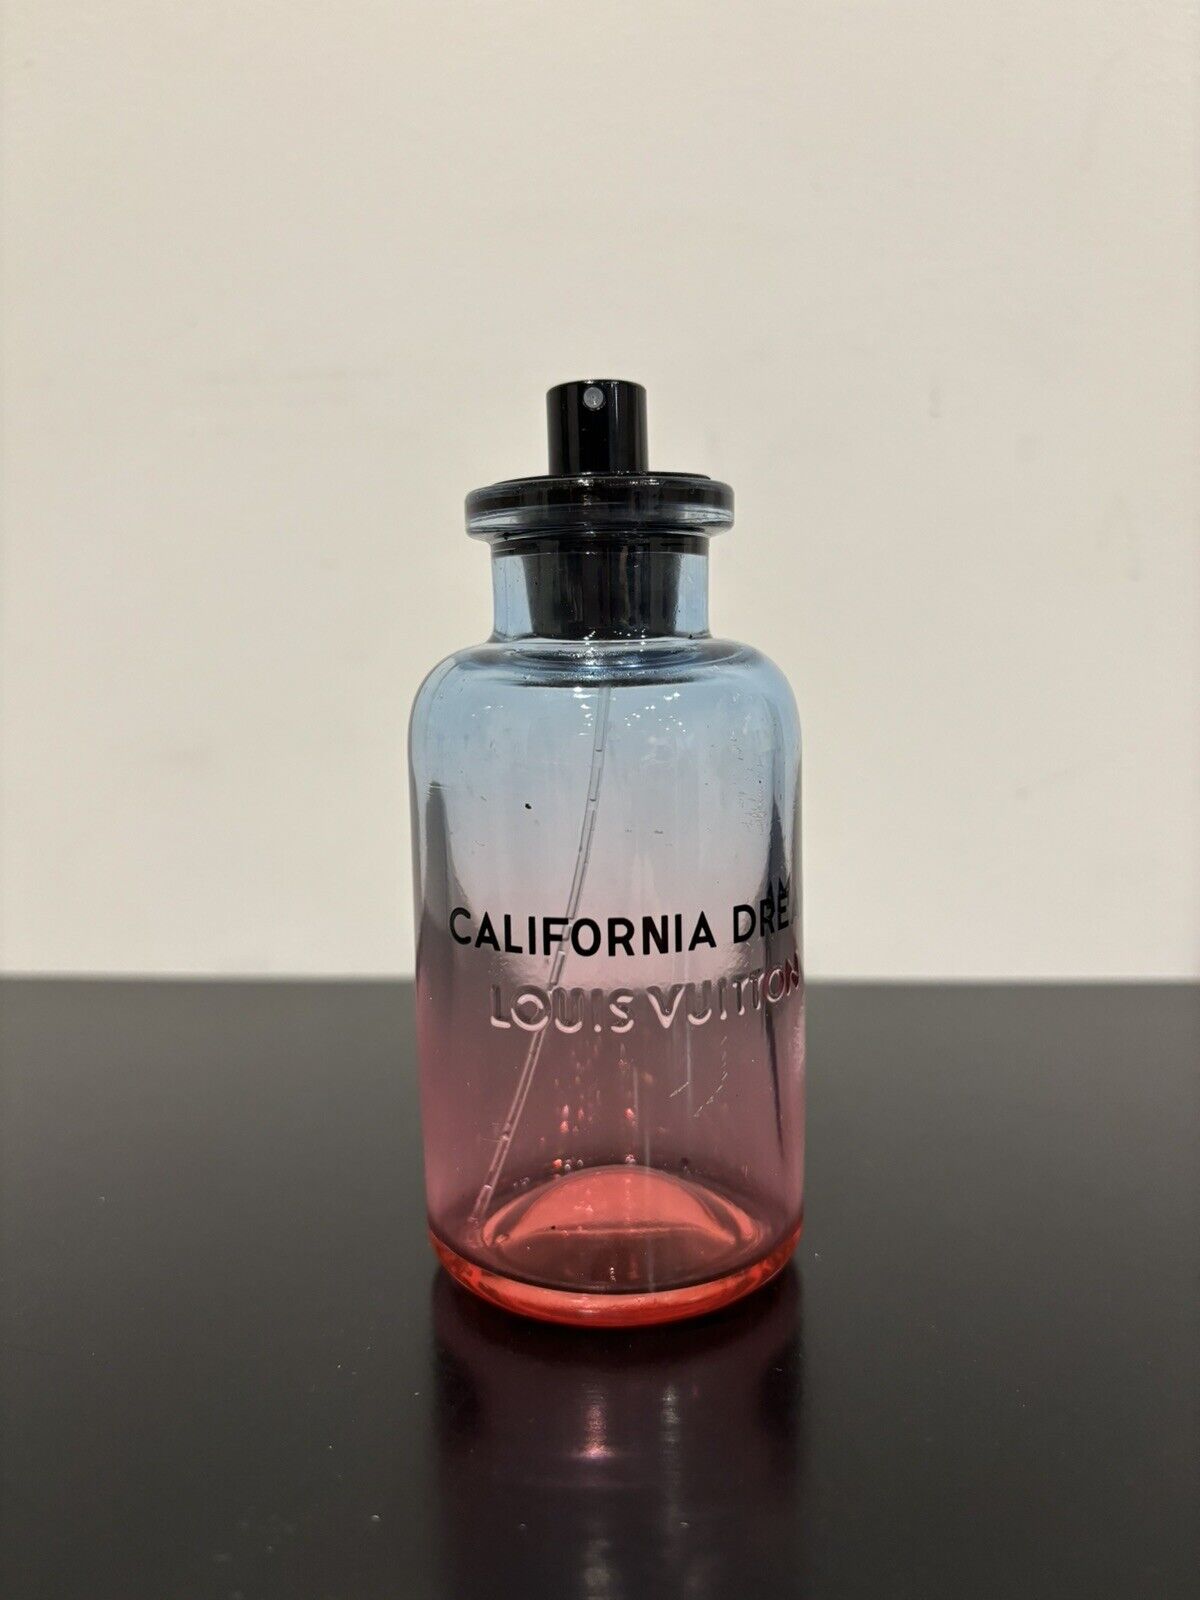 Louis Vuitton California Dream Empty tester bottle